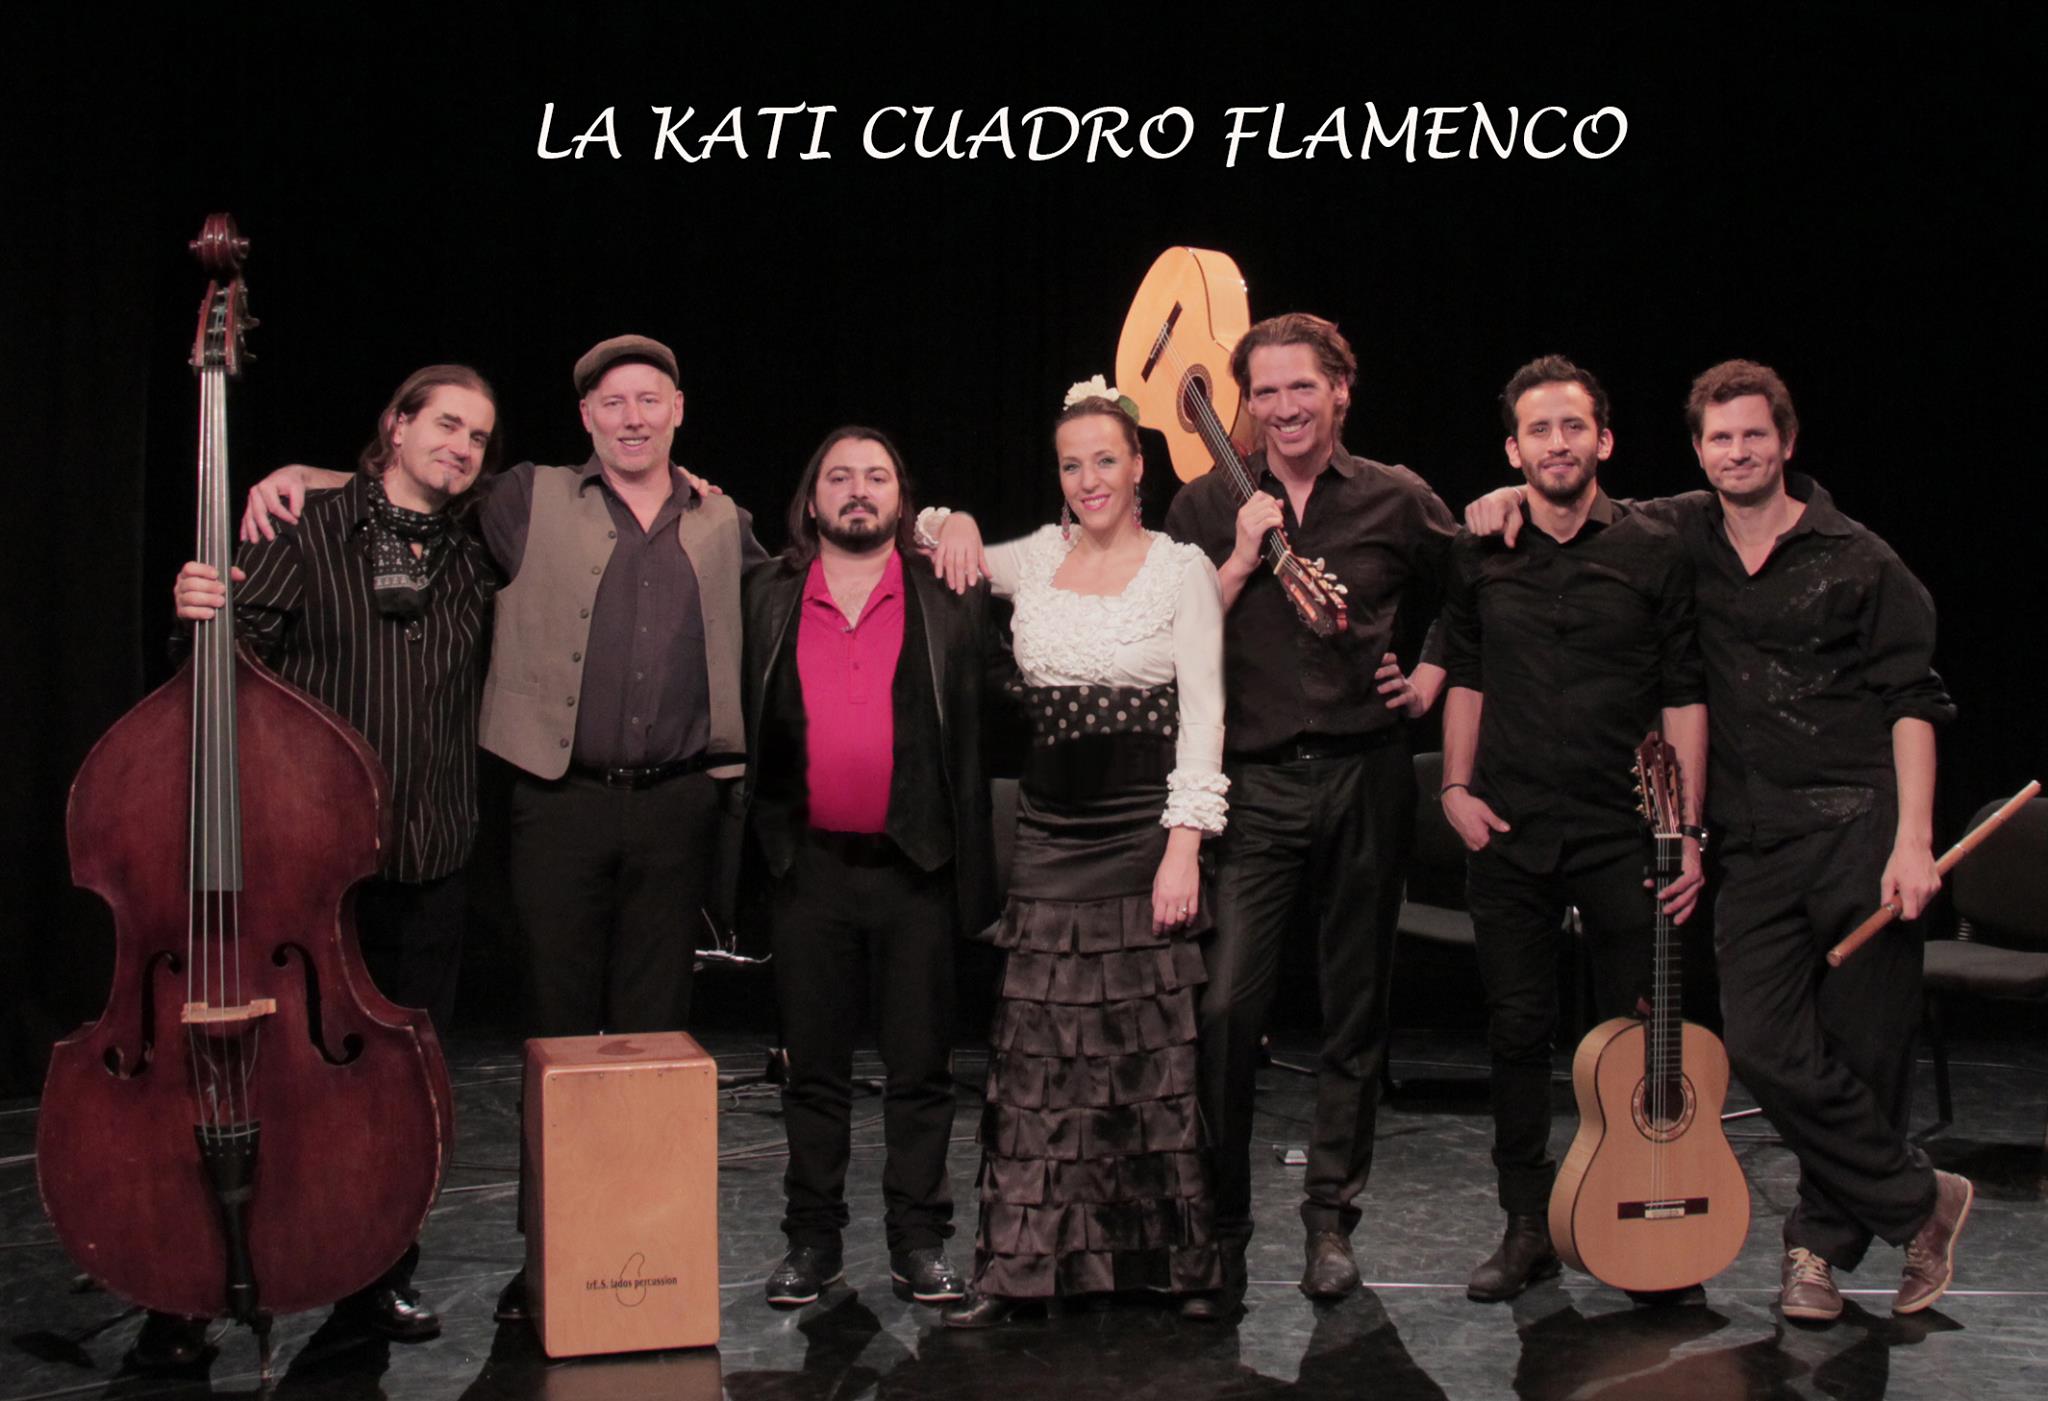 La Kati Cuadro Flamenco